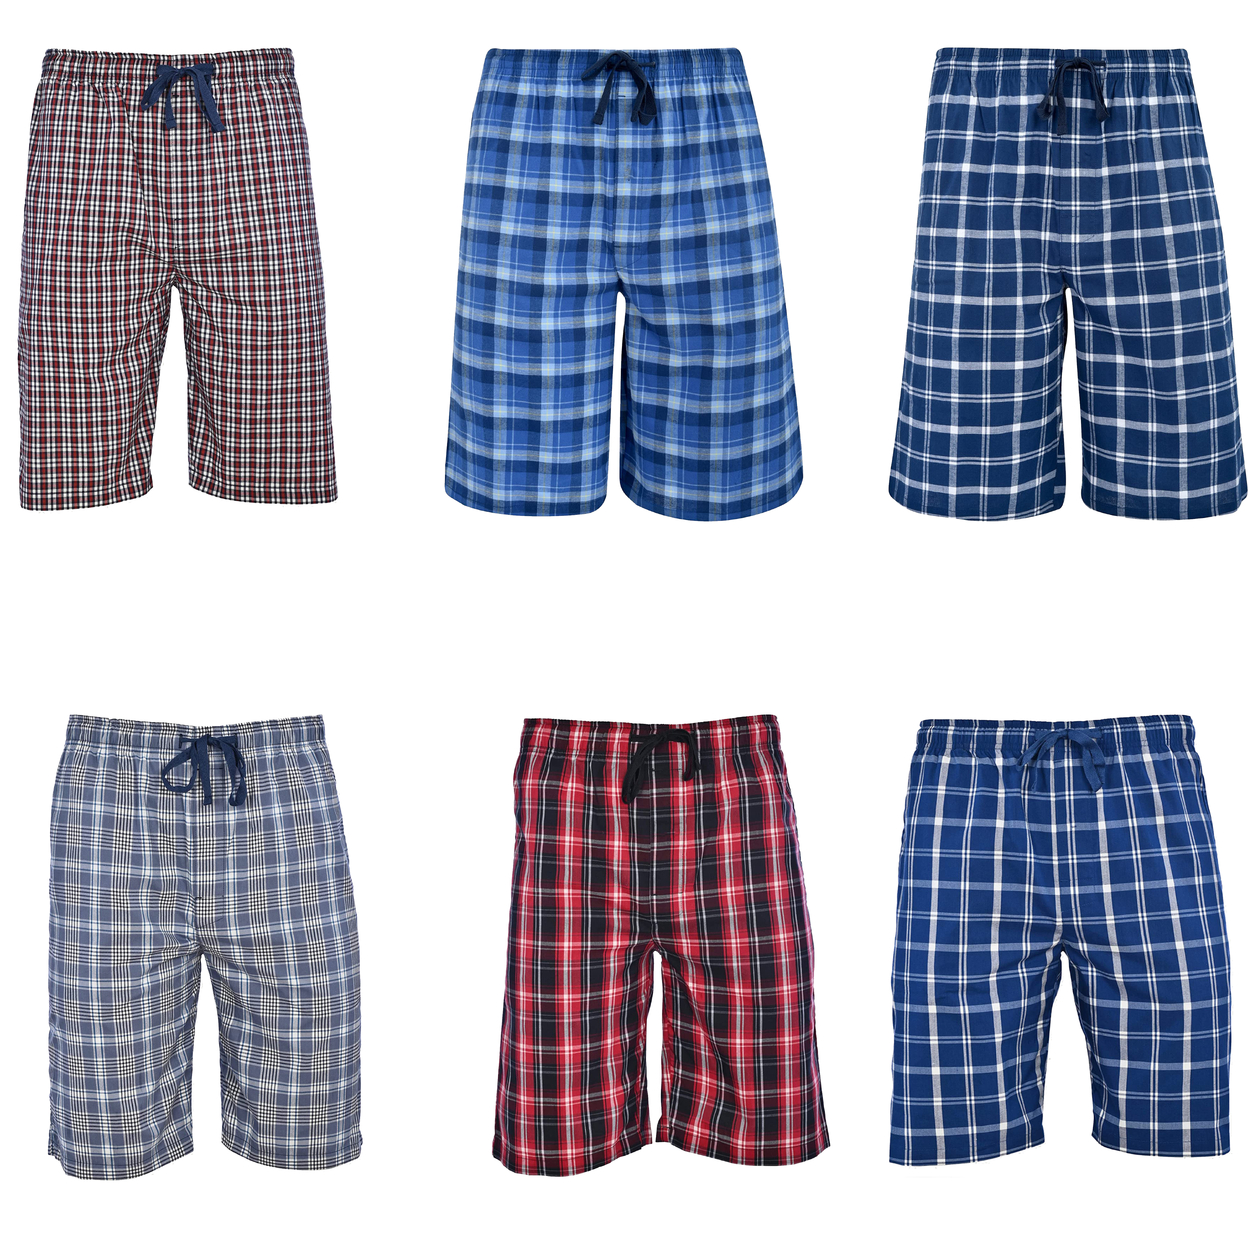 2-Pack: Men's Ultra Soft Plaid Lounge Pajama Sleep Wear Shorts - Black & Red, Large